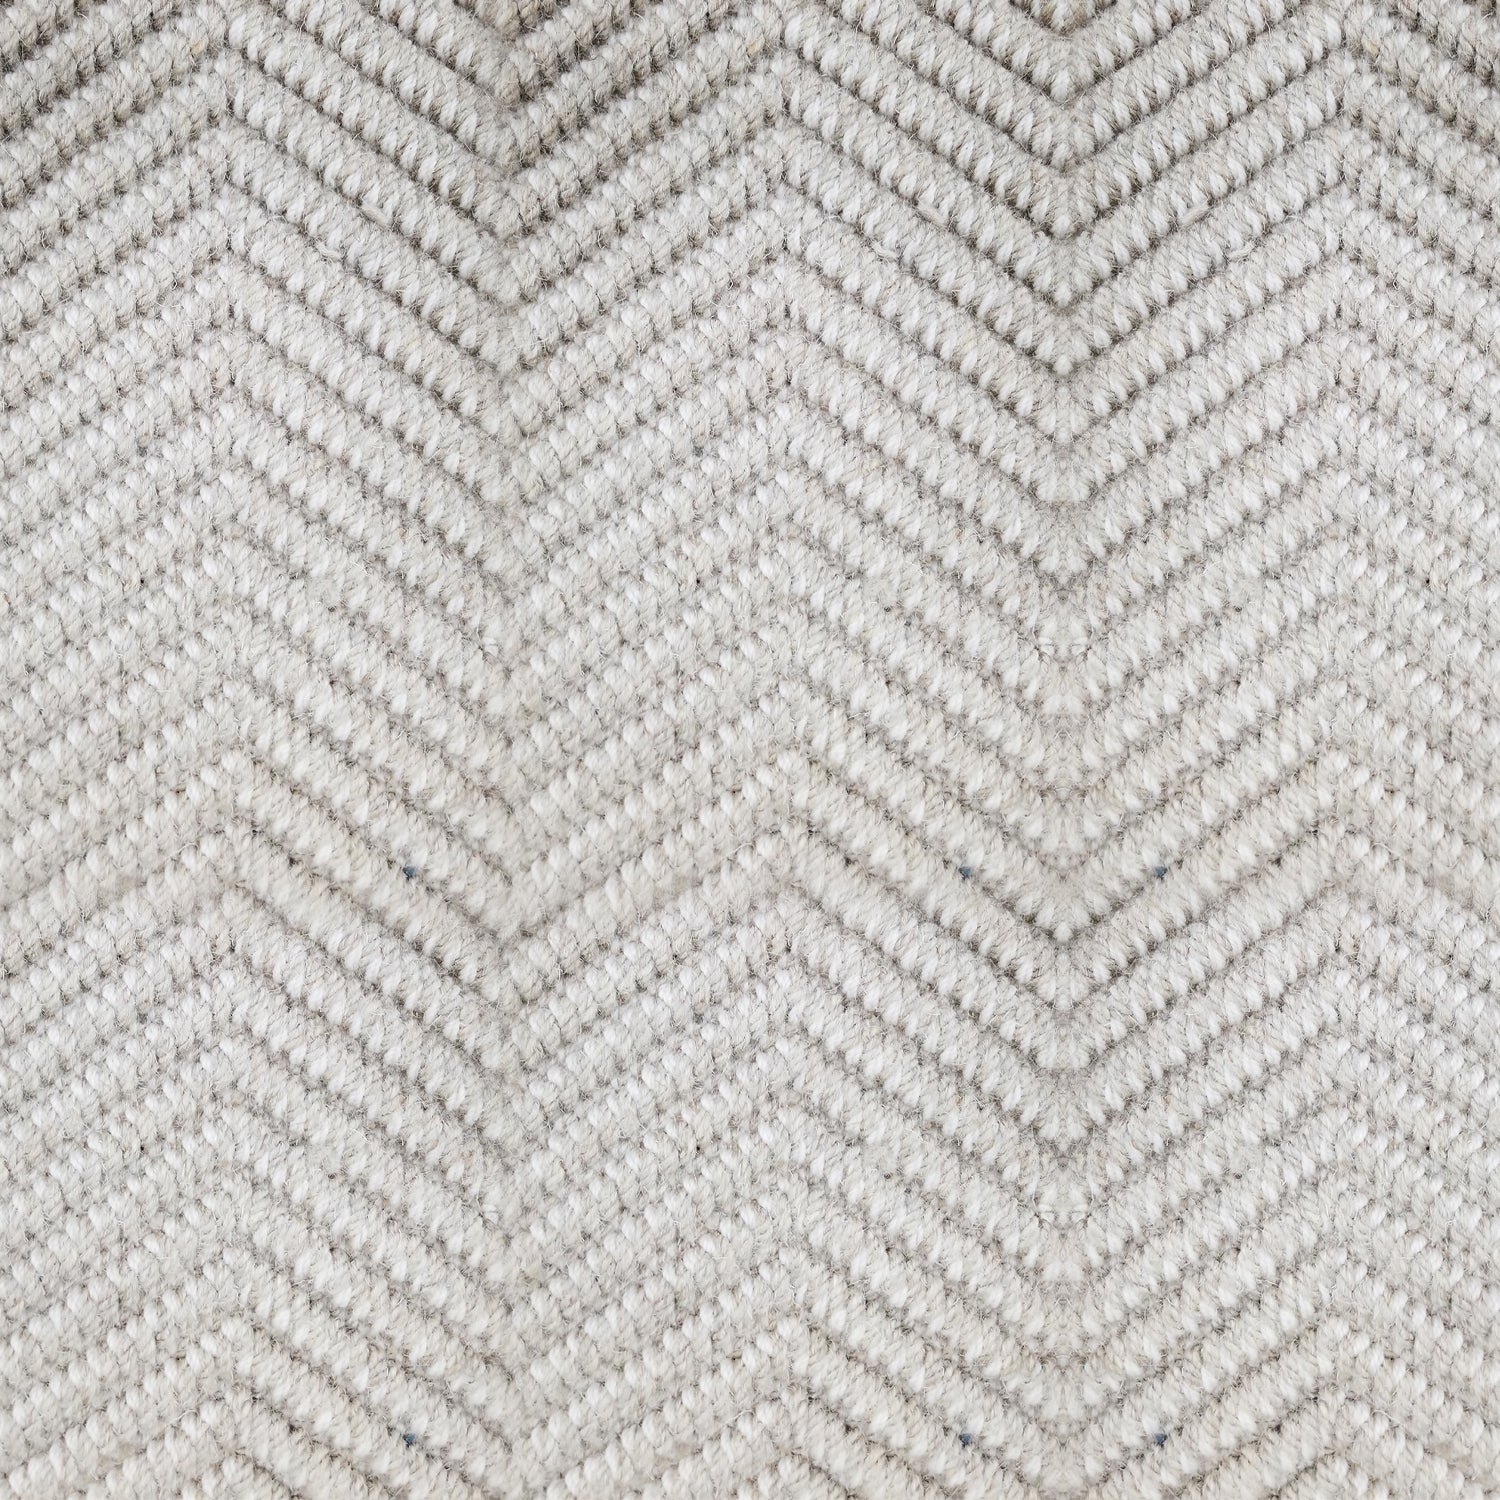 Wool broadloom carpet swatch in a dimensional chevron weave in a light silver colorway.